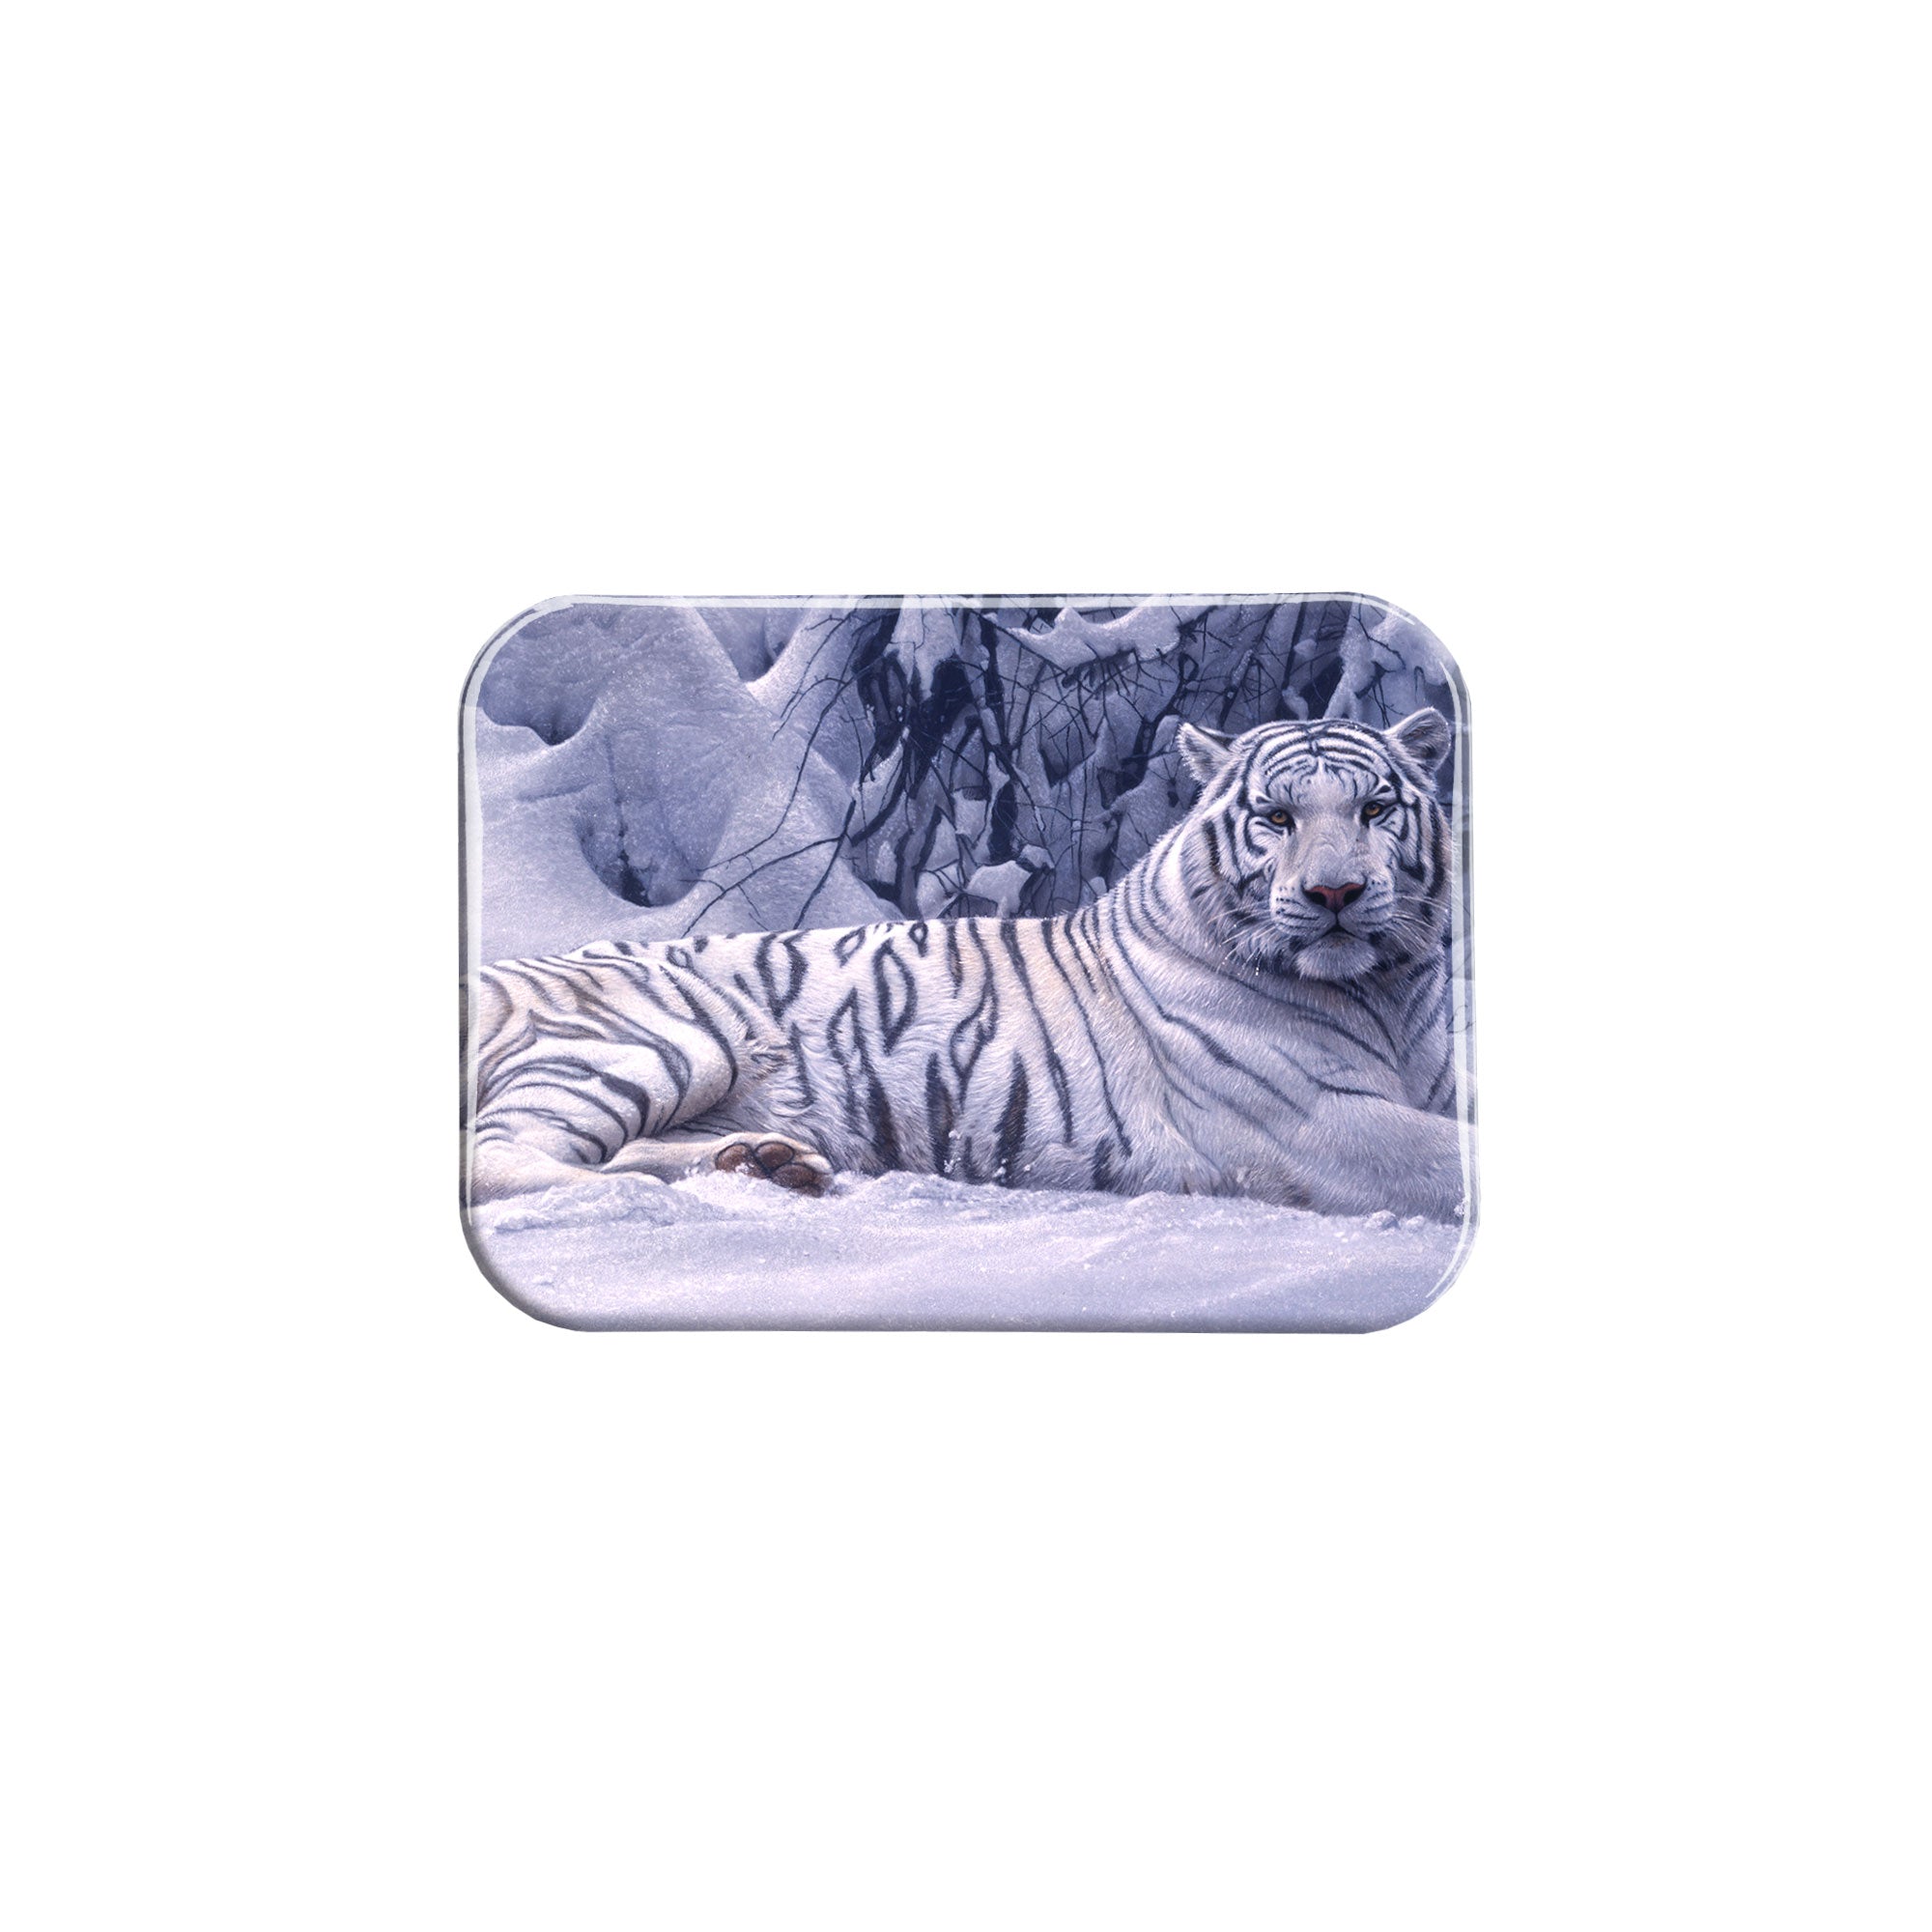 "White Tiger" - 2.5" X 3.5" Rectangle Fridge Magnets